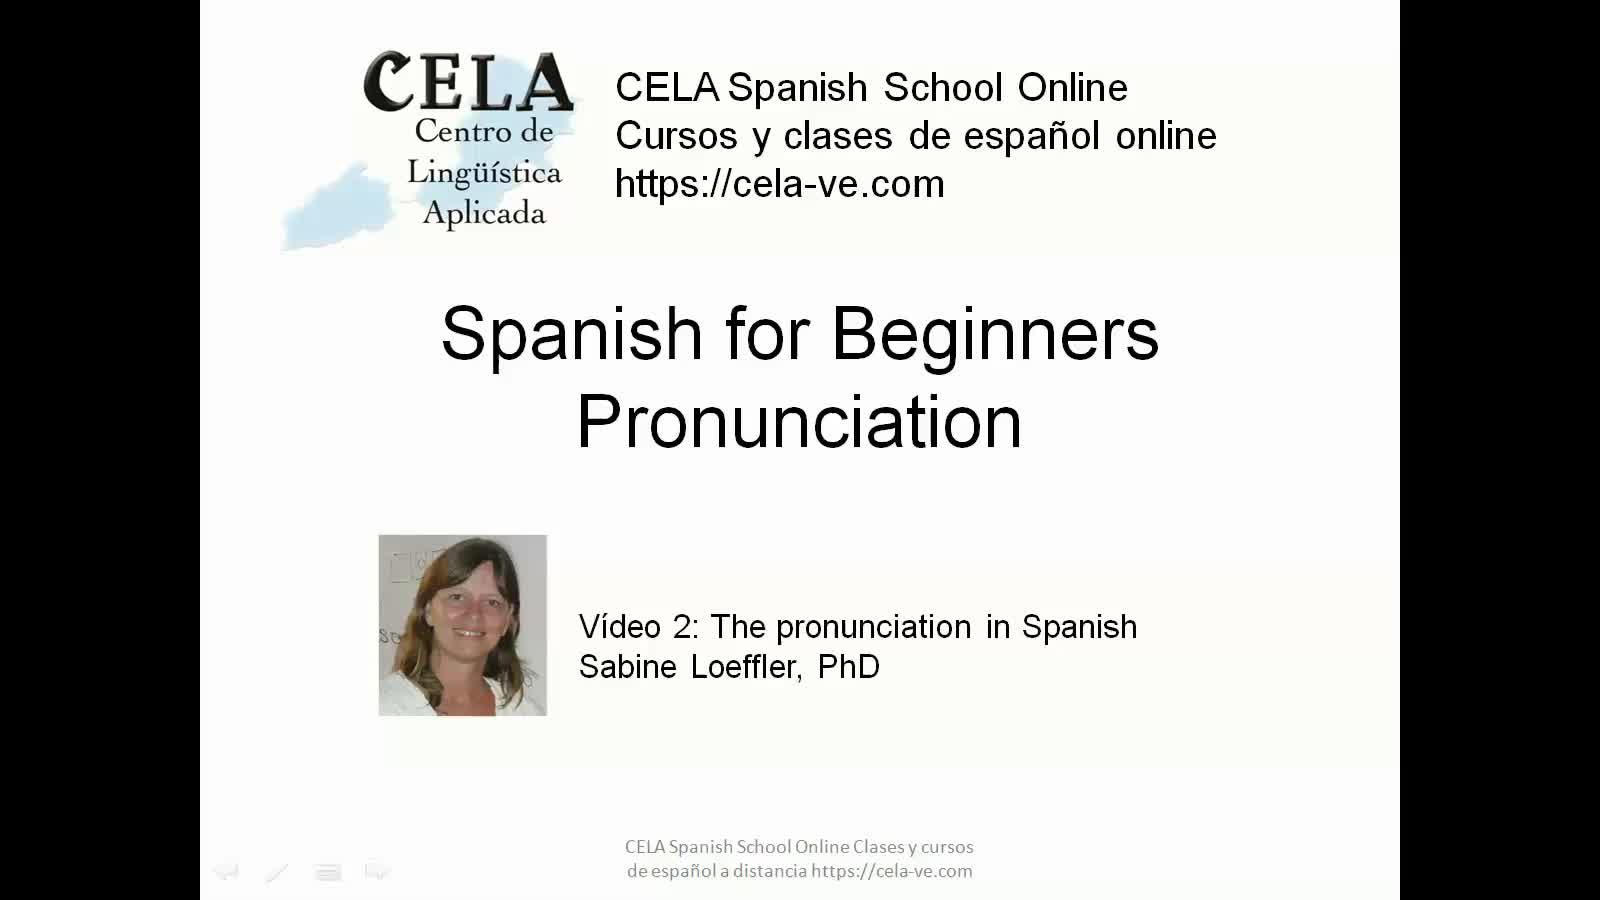 Spanish pronunciation